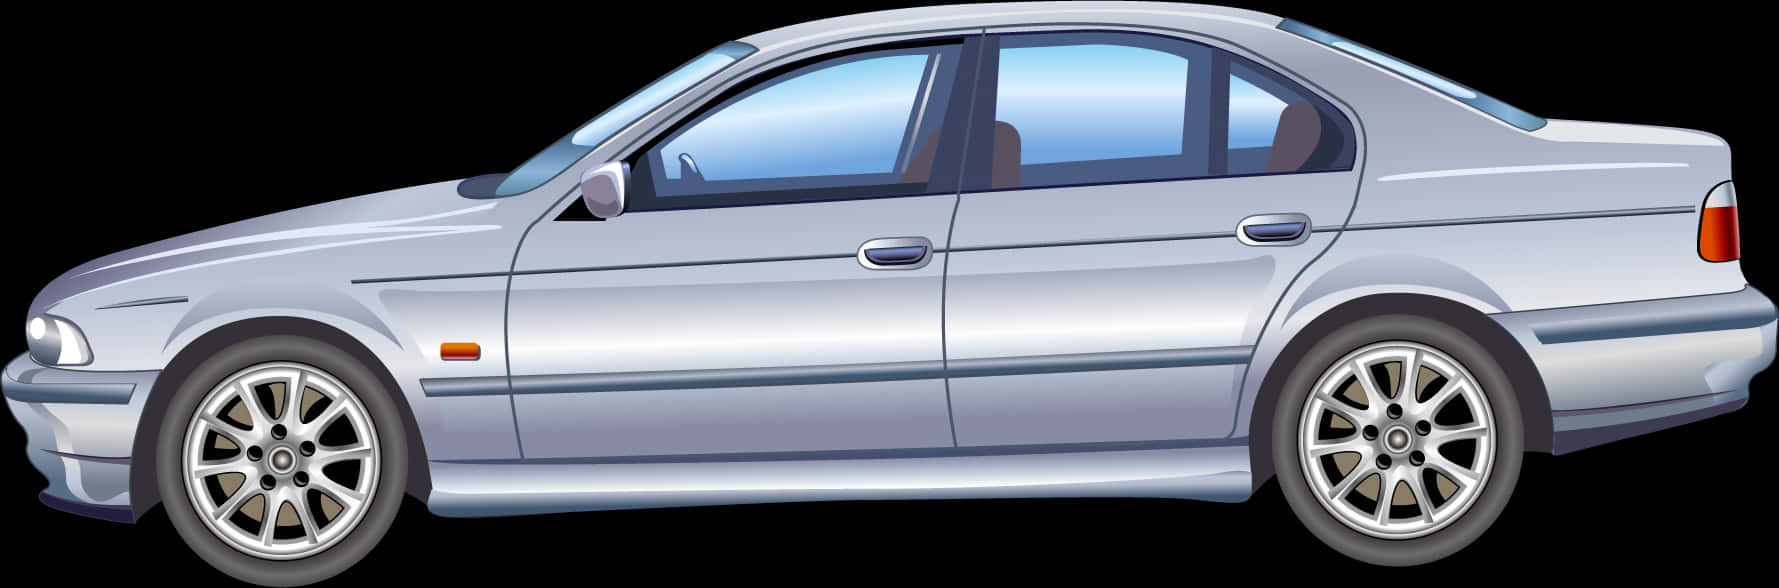 Silver Sedan Side View Vector